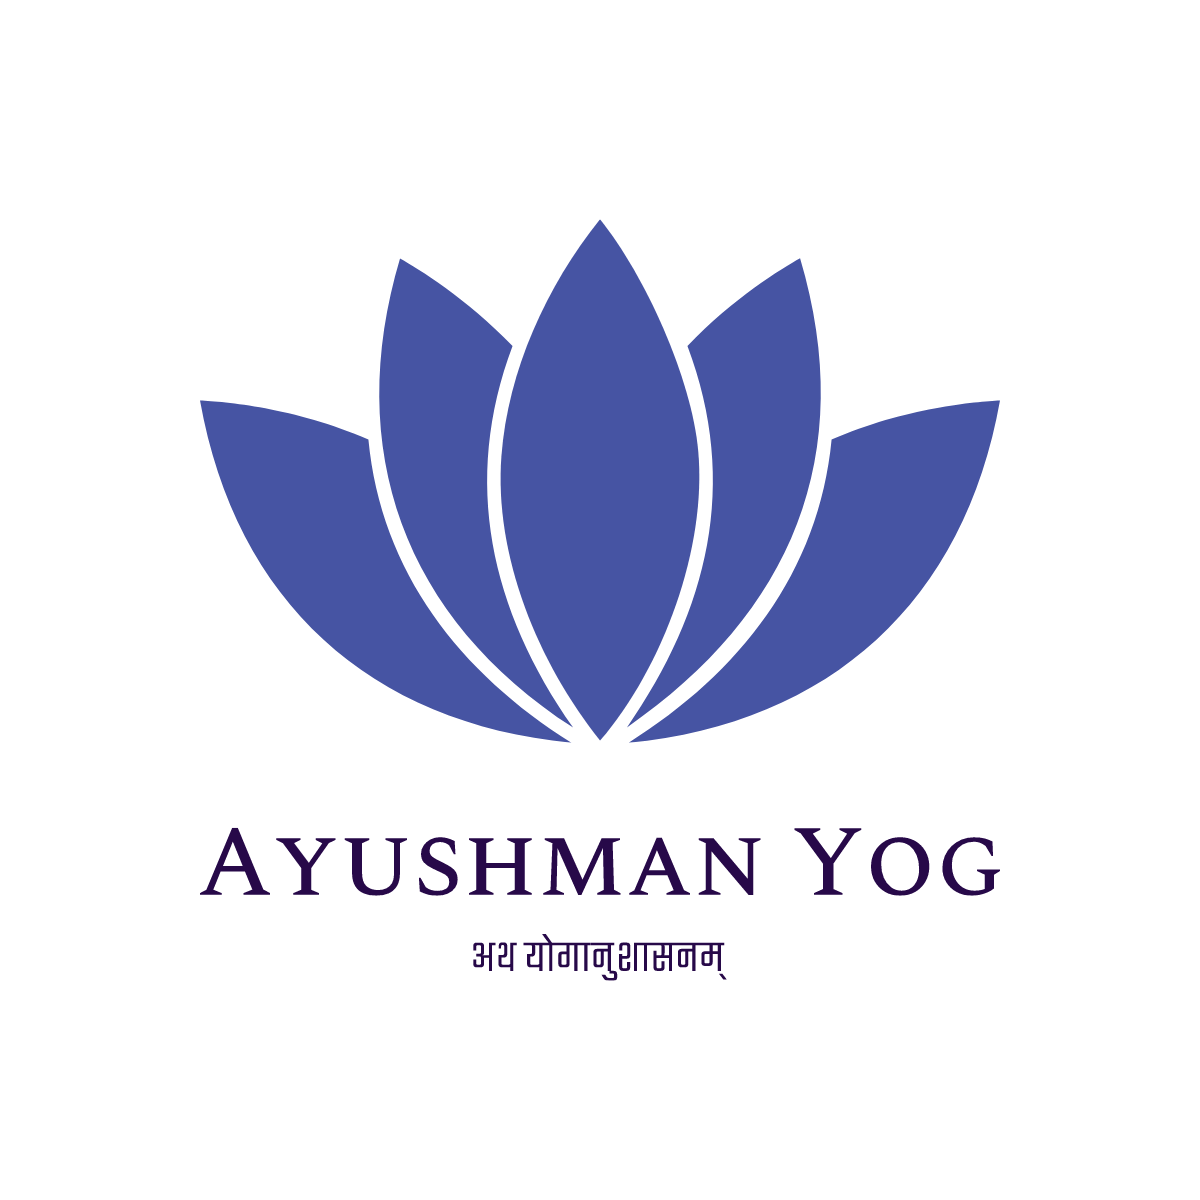 Best Ayurveda Course Online | Holistic Wellness Mastery